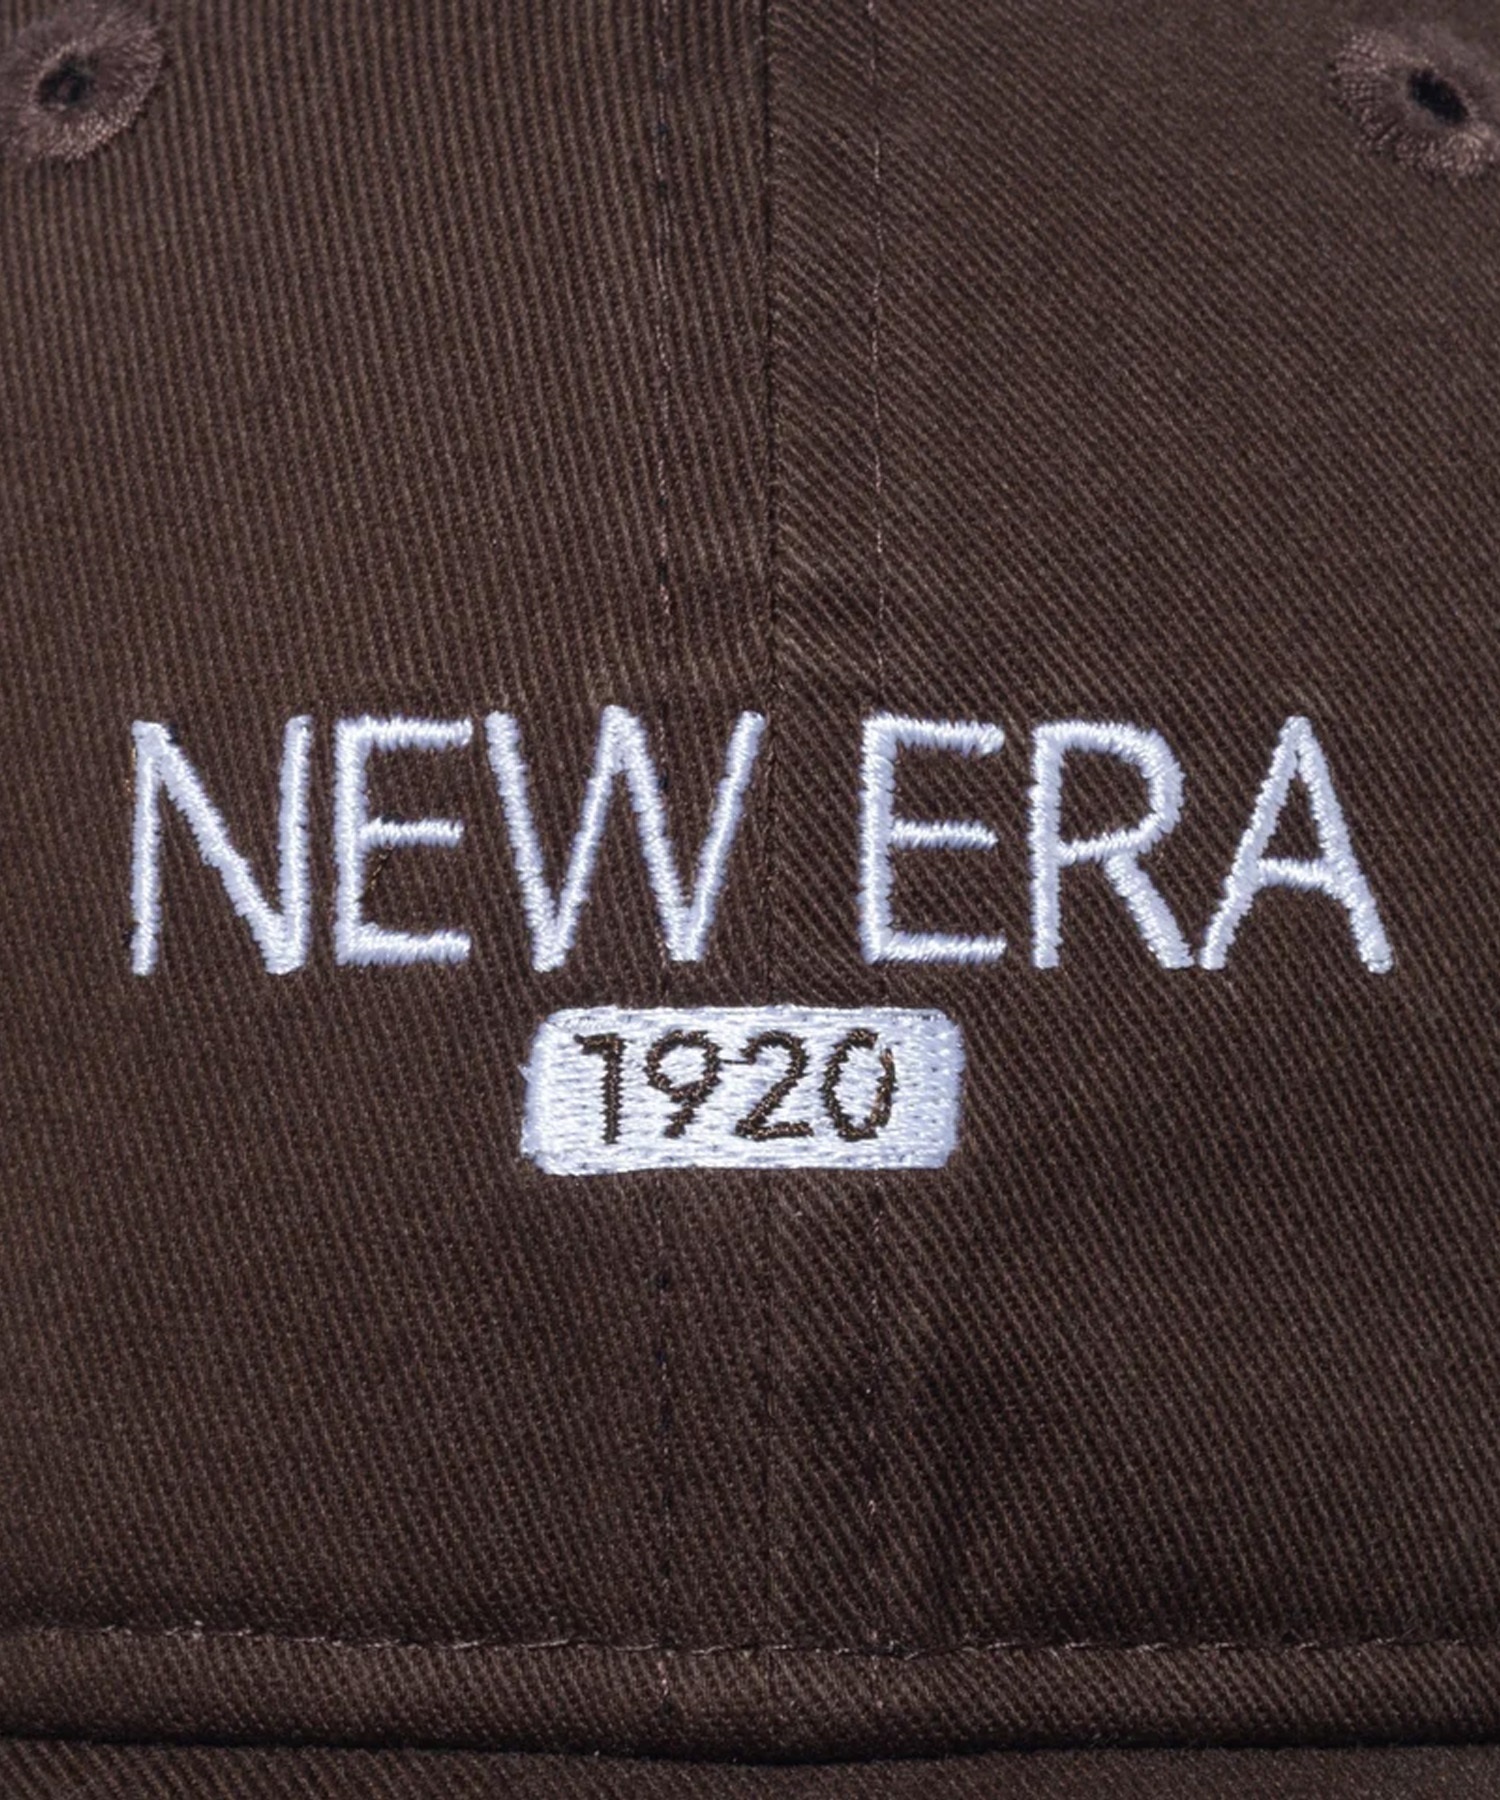 NEW ERA/ニューエラ Youth 9TWENTY New Era 1920 ウォルナット キッズ キャップ 帽子 13762821(WAL-YTH)